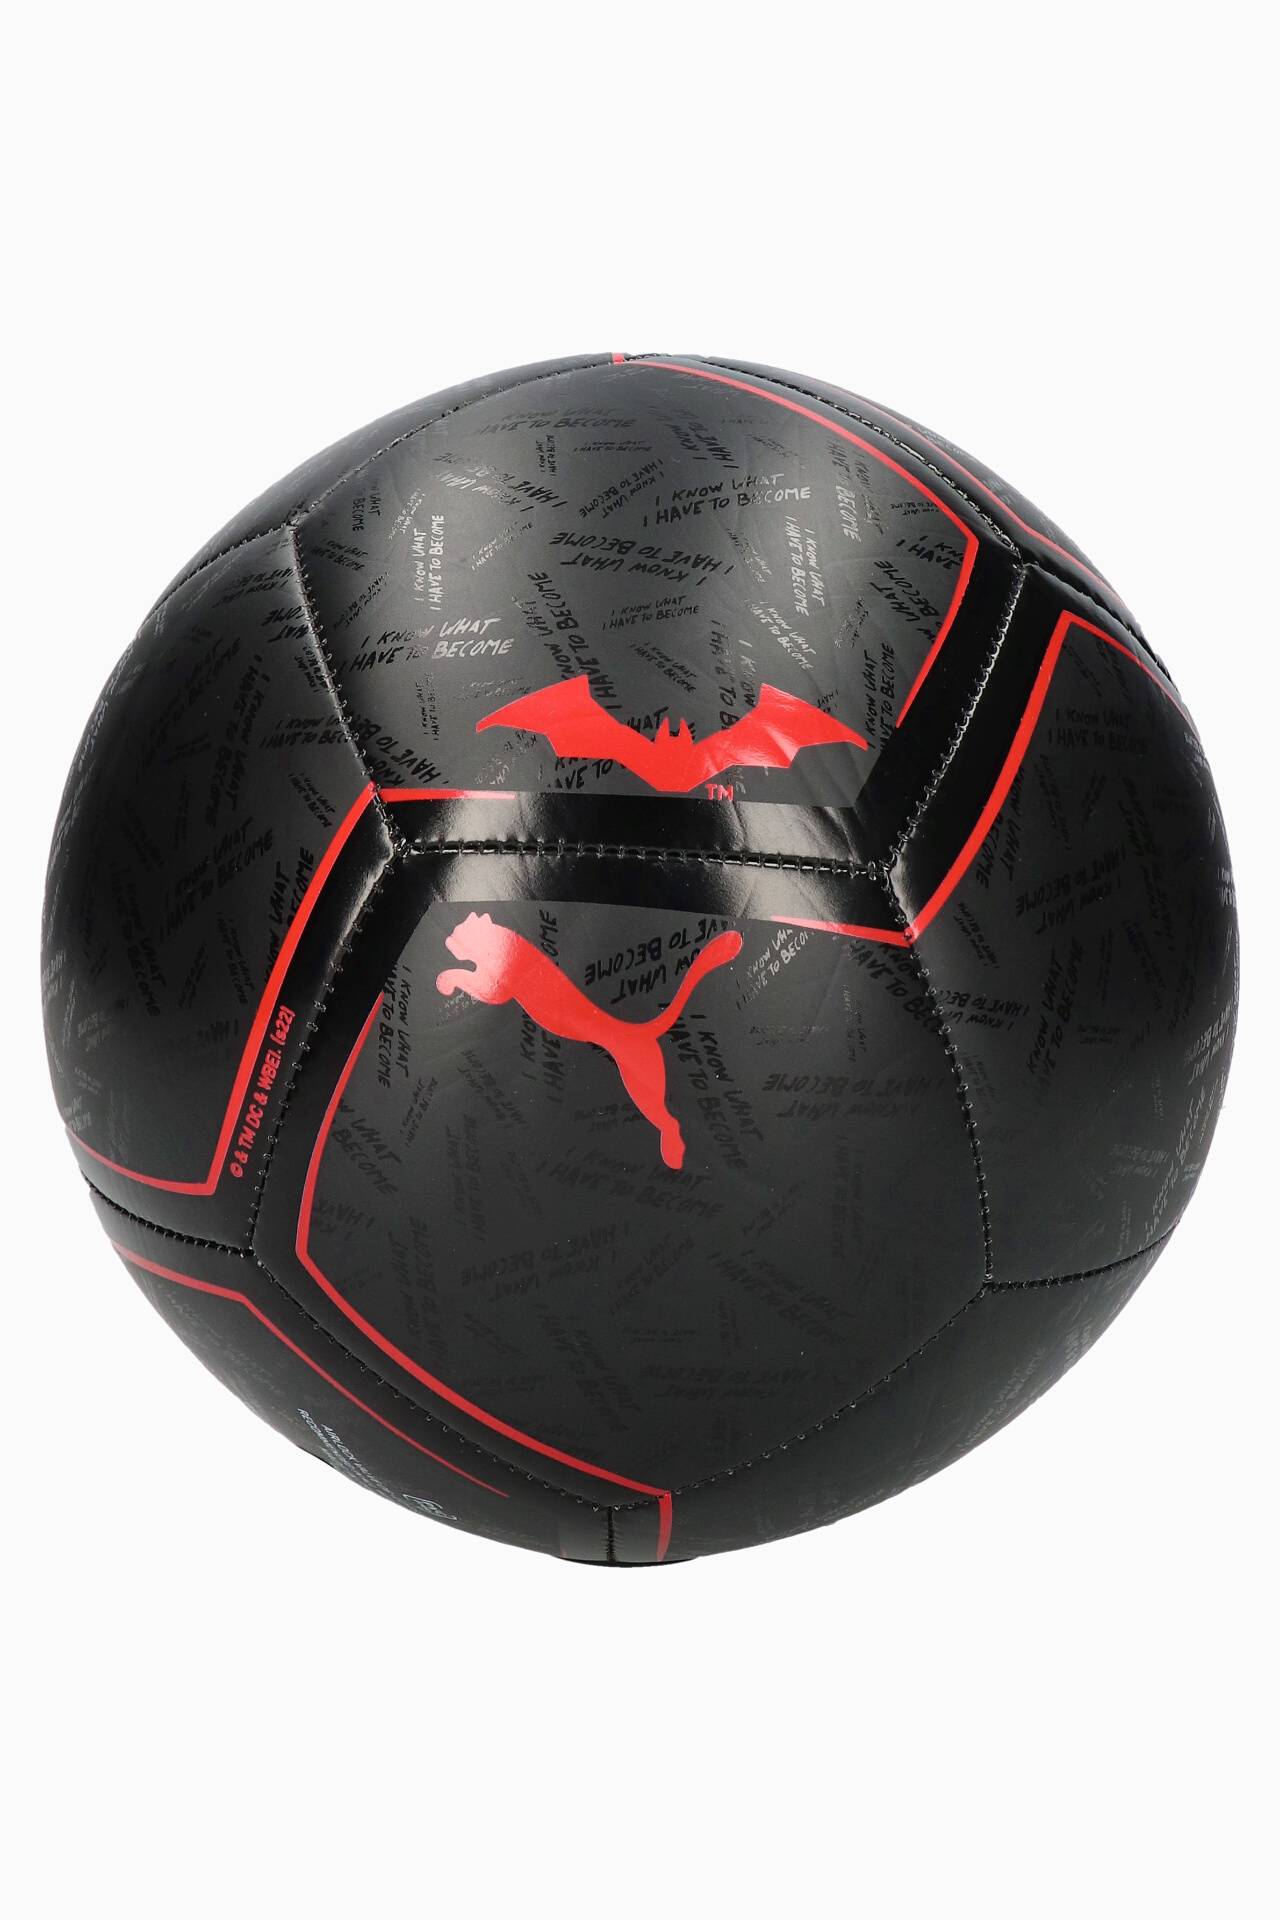 Football Puma x Batman Graphic size 5  - Football boots &  equipment